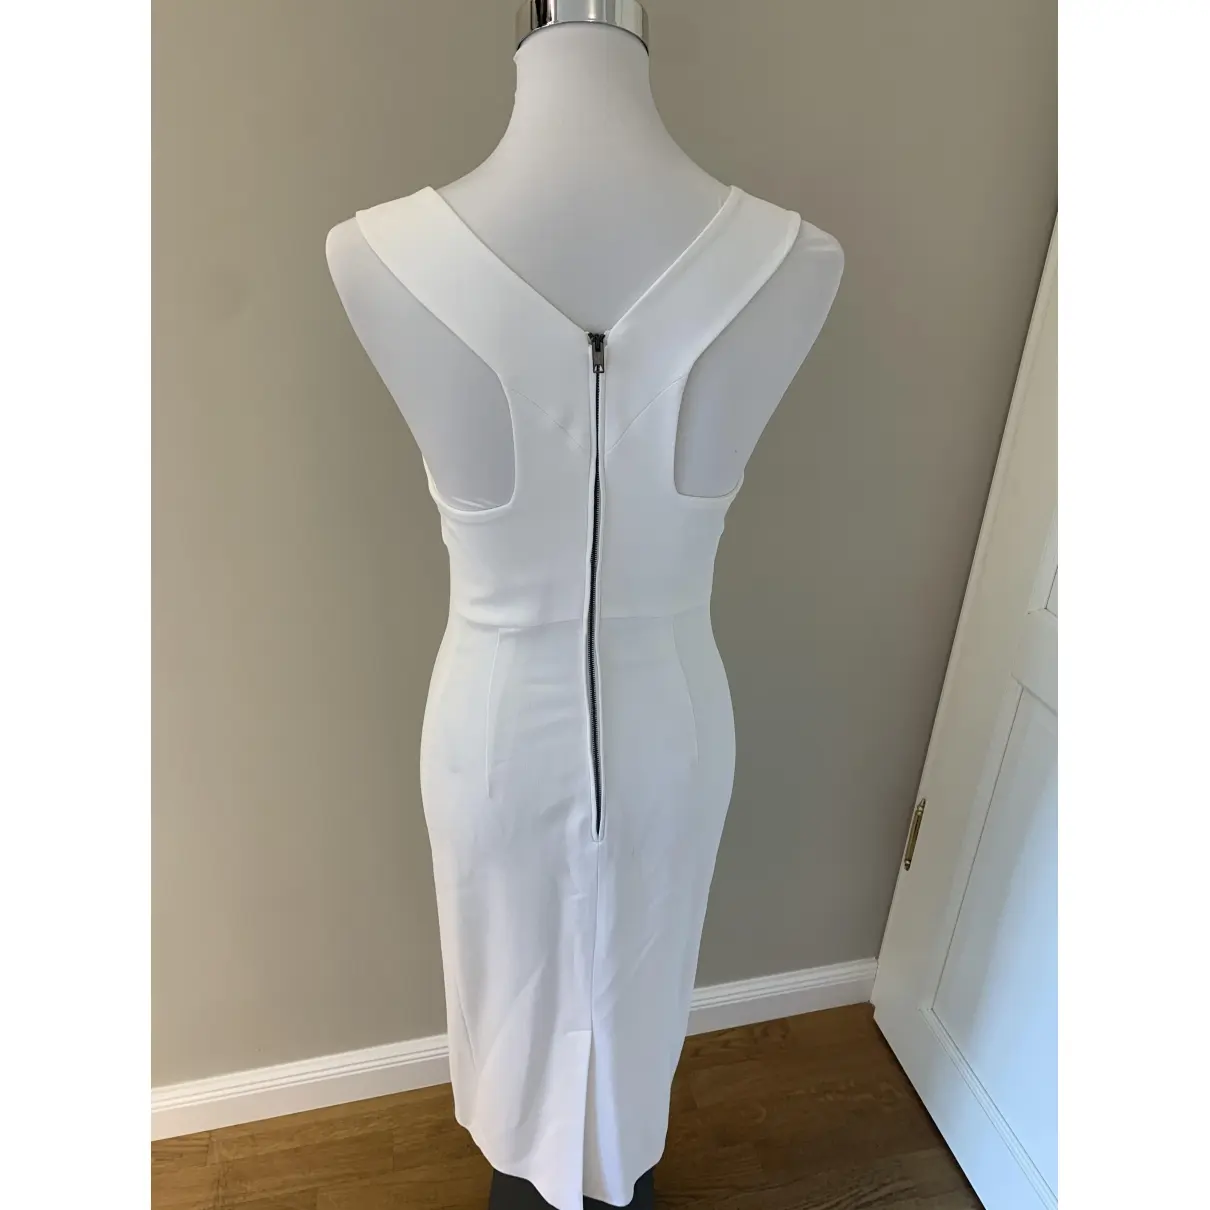 Burberry Mid-length dress for sale